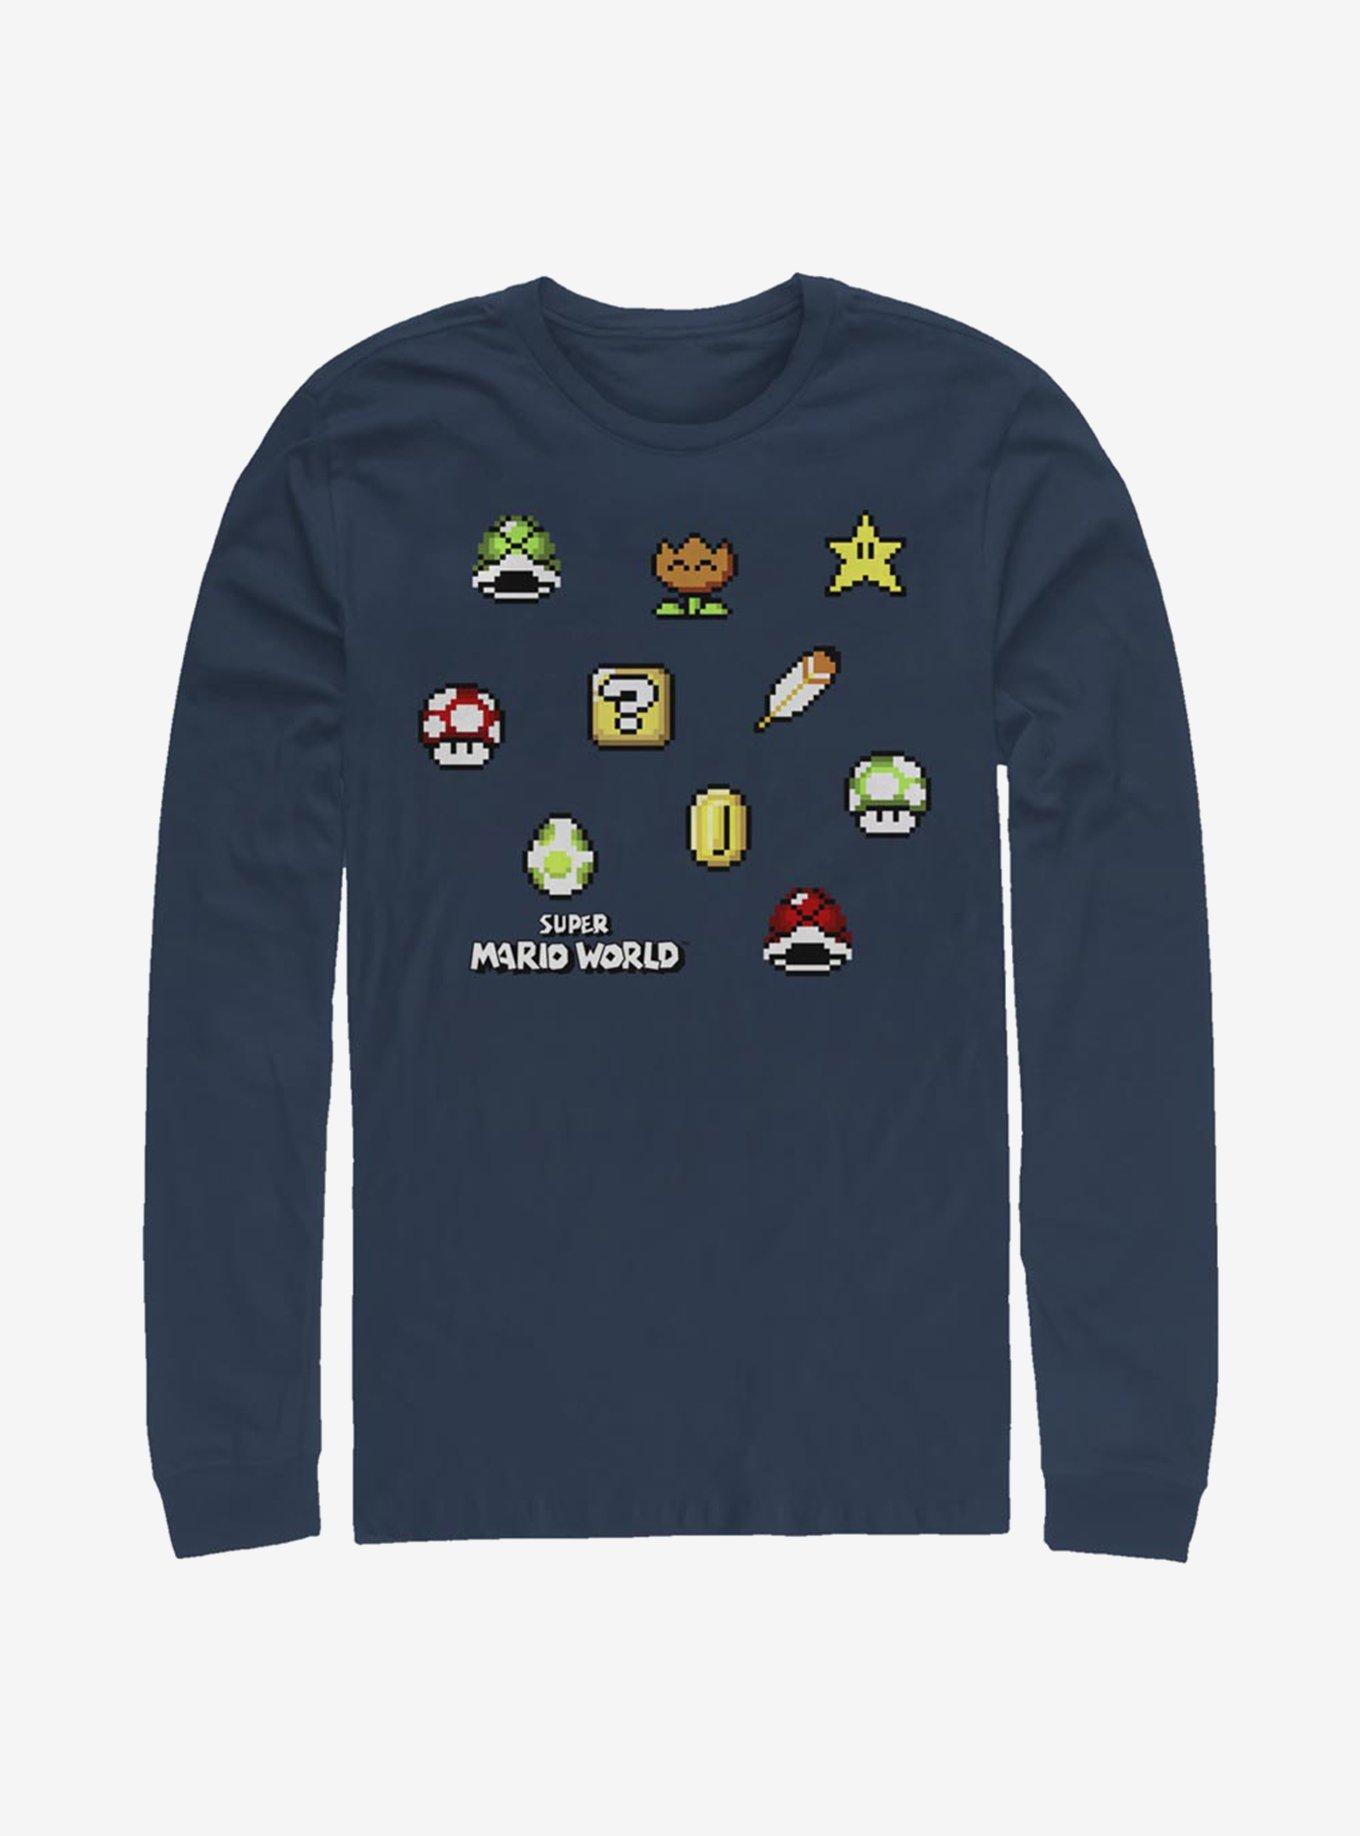 Nintendo Super Mario Maker Items Scatter Long-Sleeve T-Shirt, NAVY, hi-res